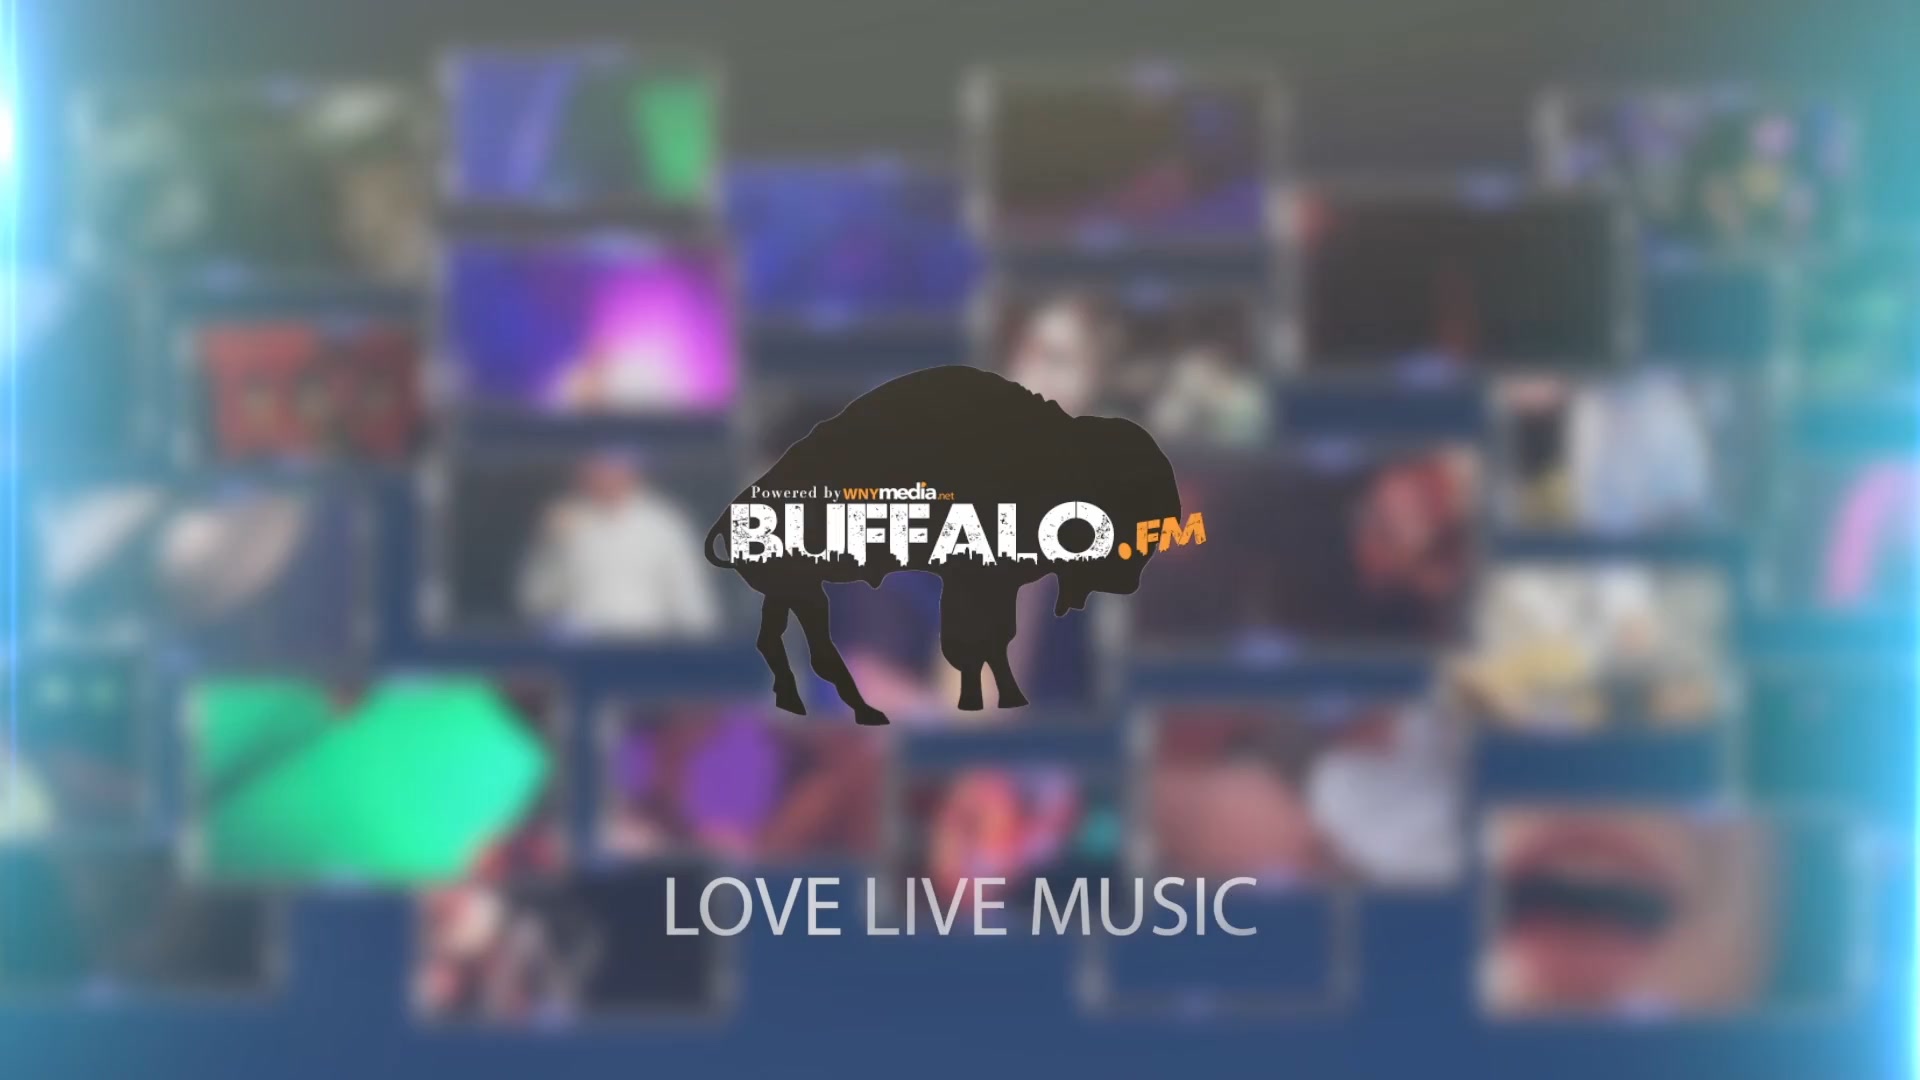 Buffalo.fm